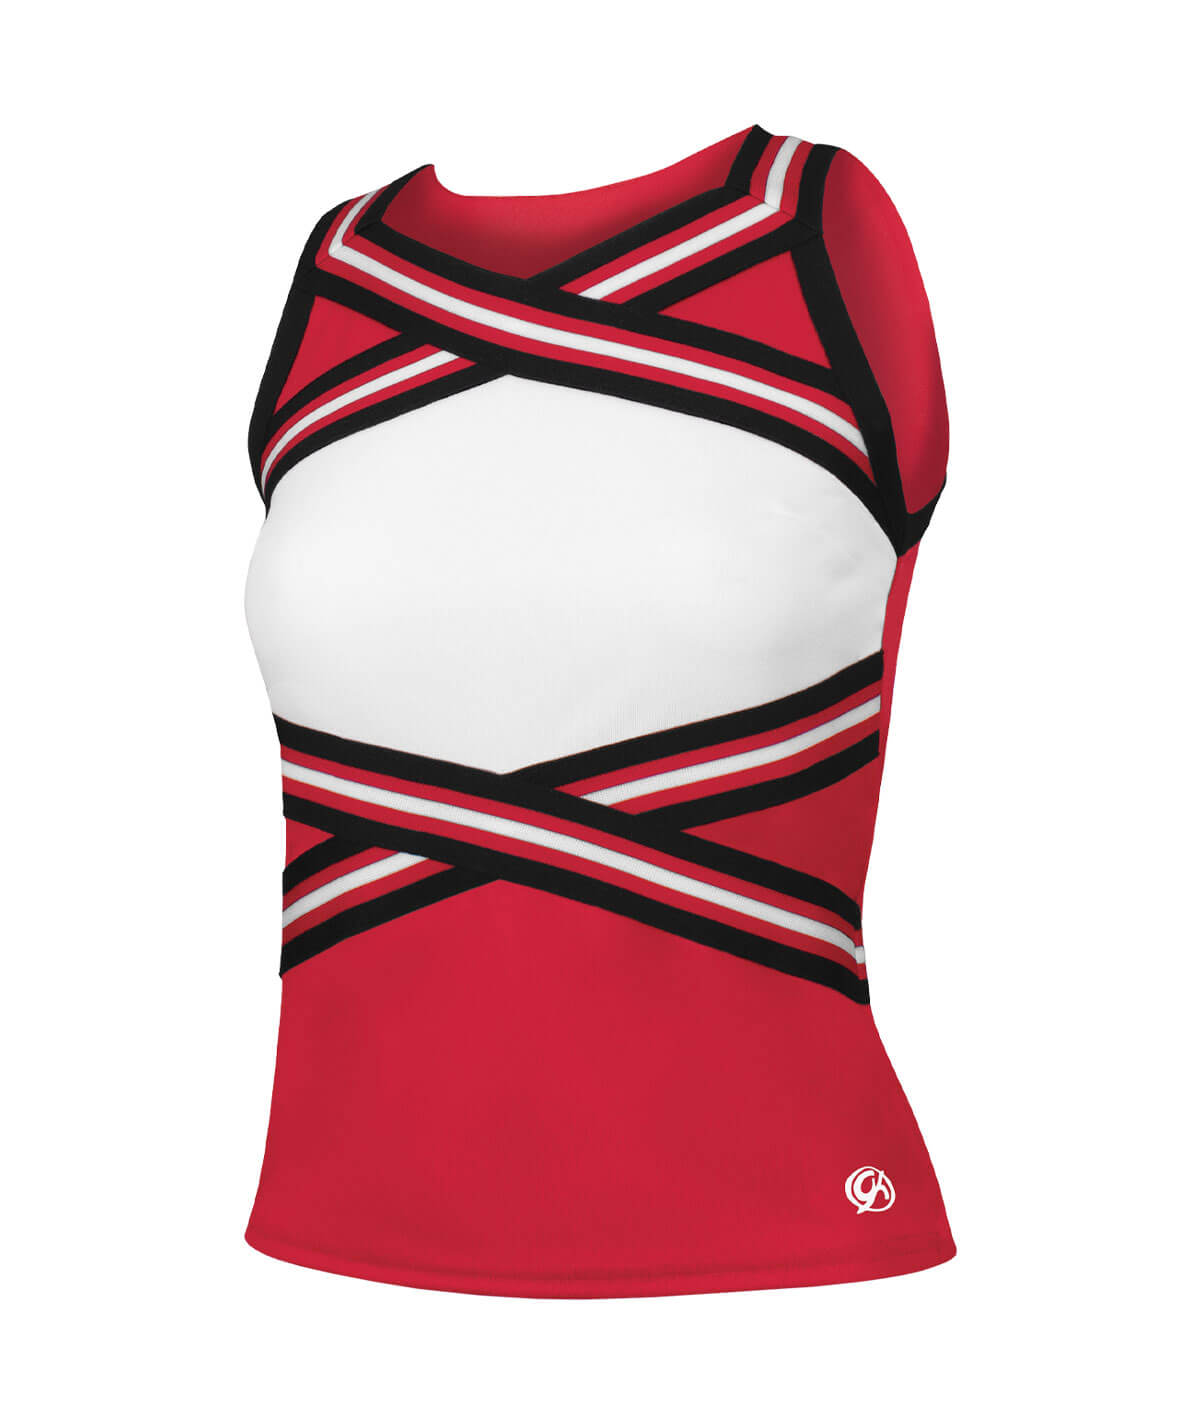 Varsity SCOTS Cheerleader Uniform Outfit Costume Fun 36" Top 28 Skirt Black Red 